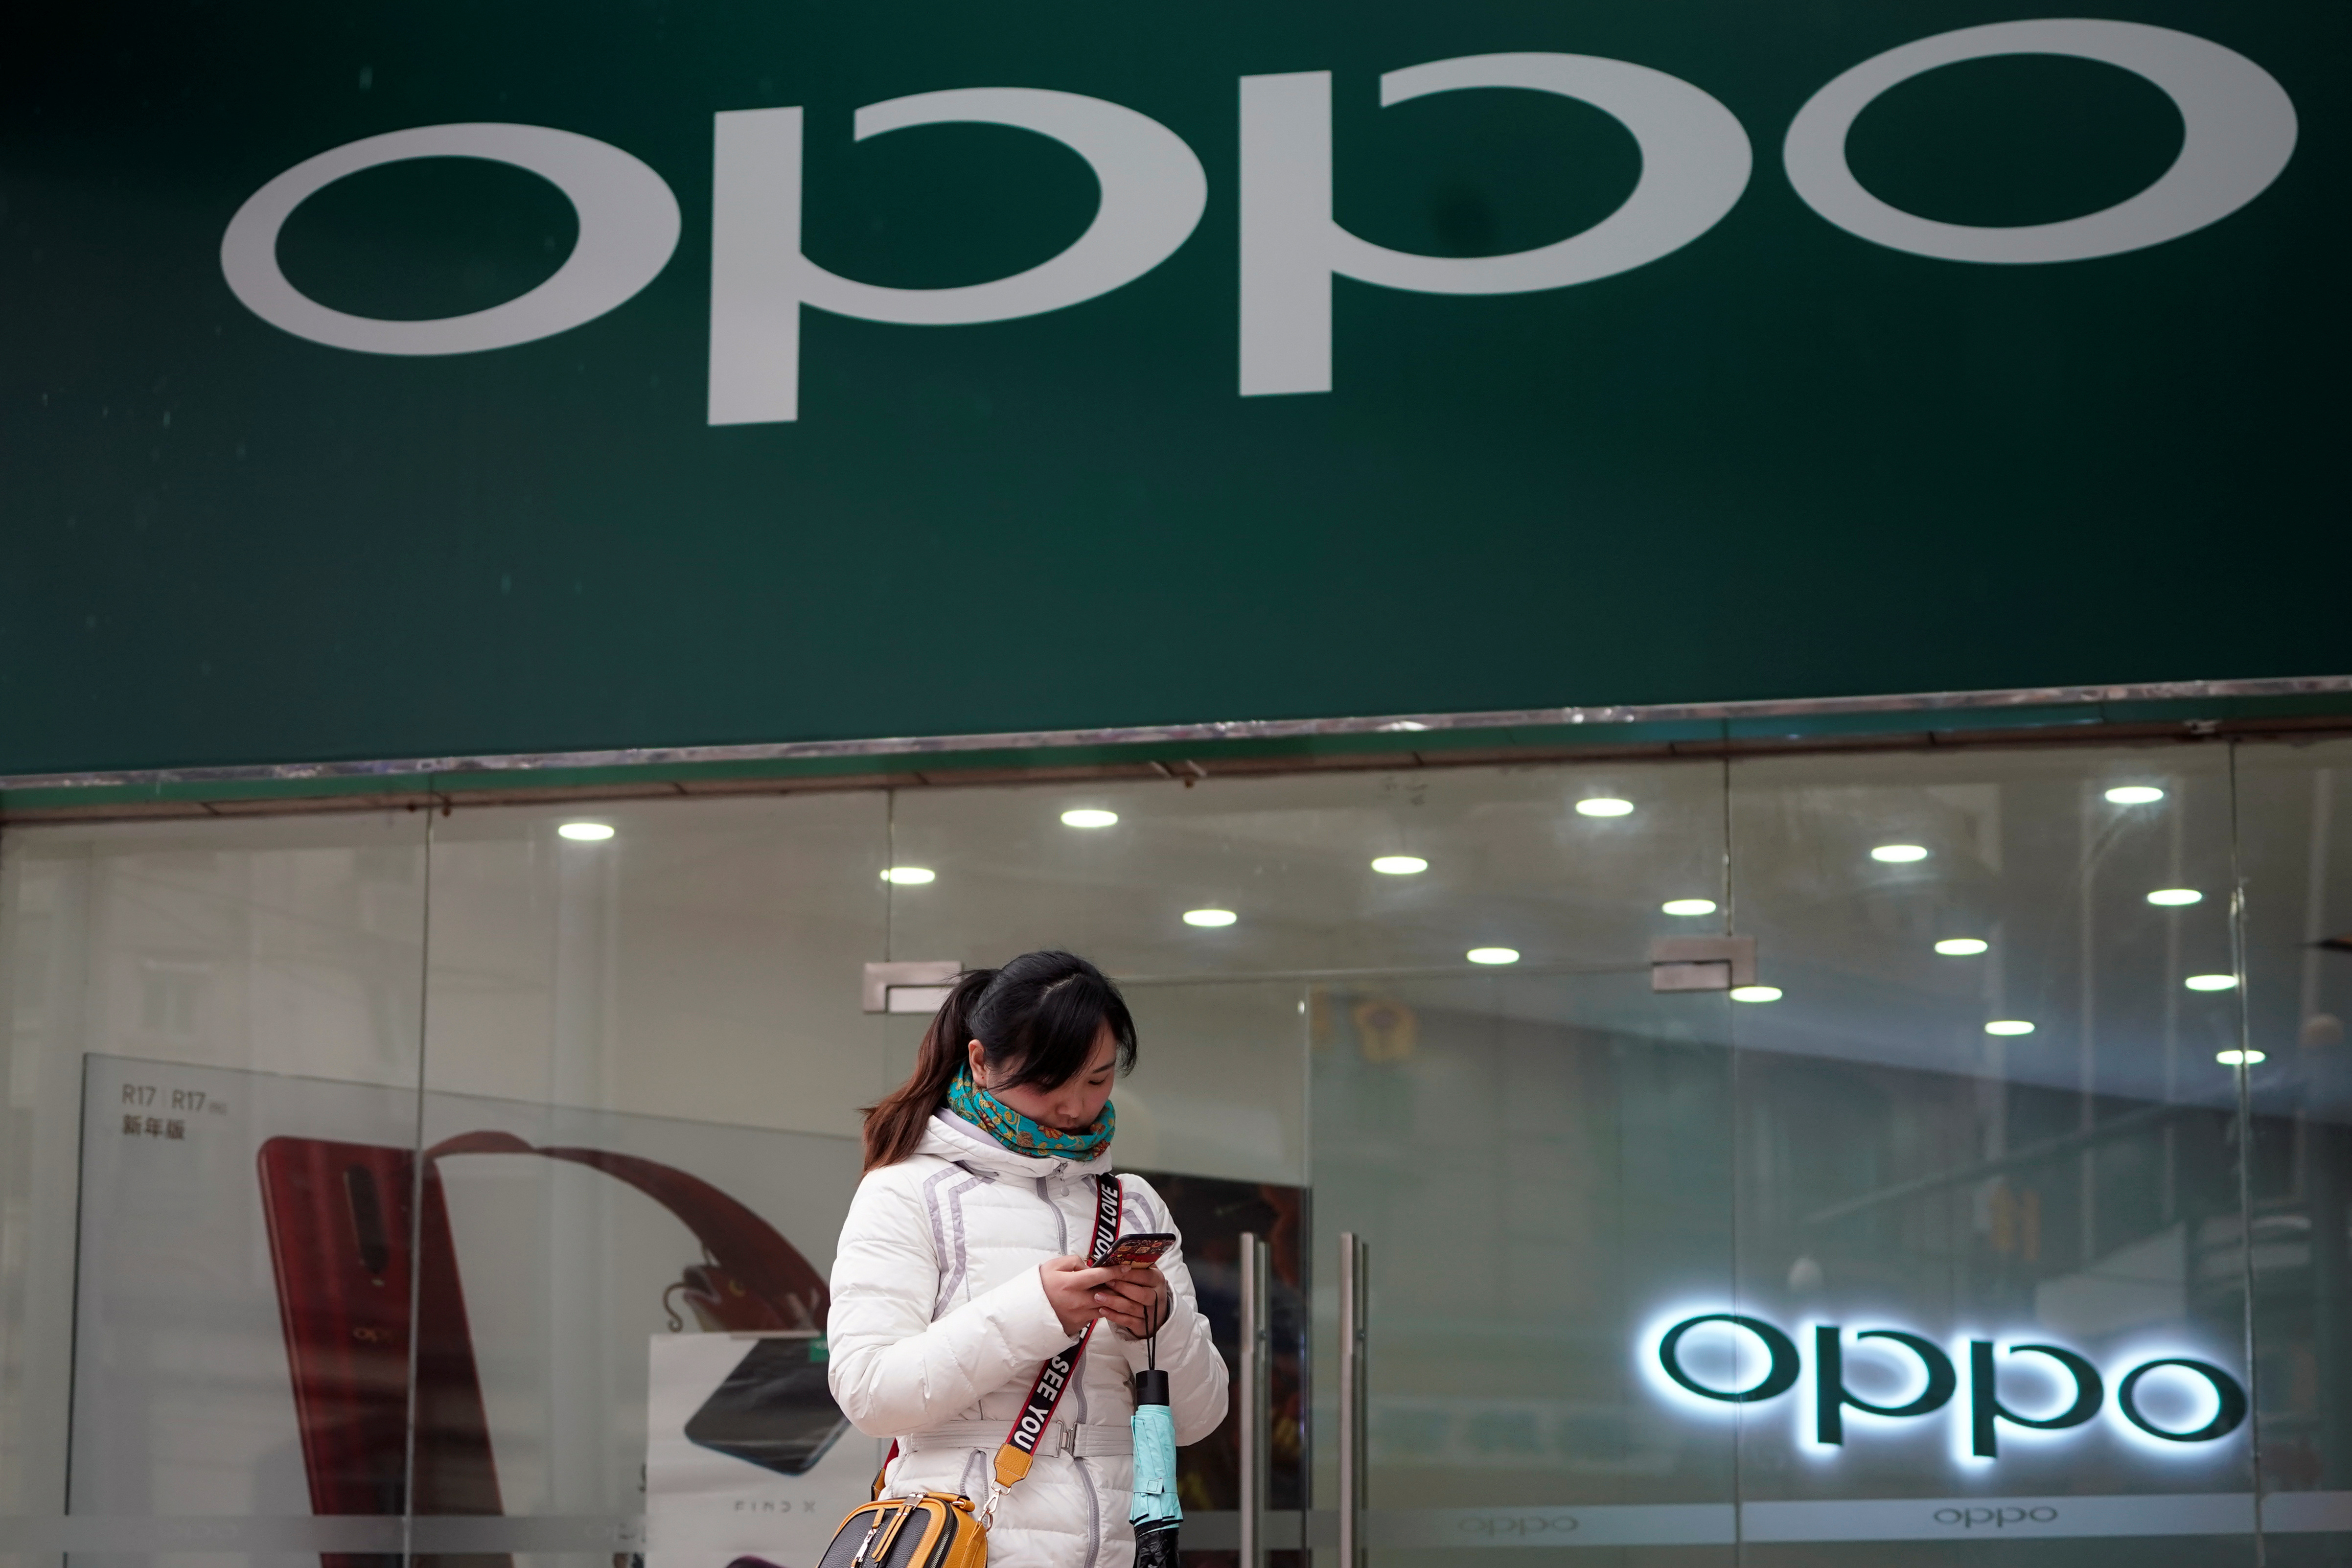 A woman walks by an Oppo logo at a shopping mall in Shanghai